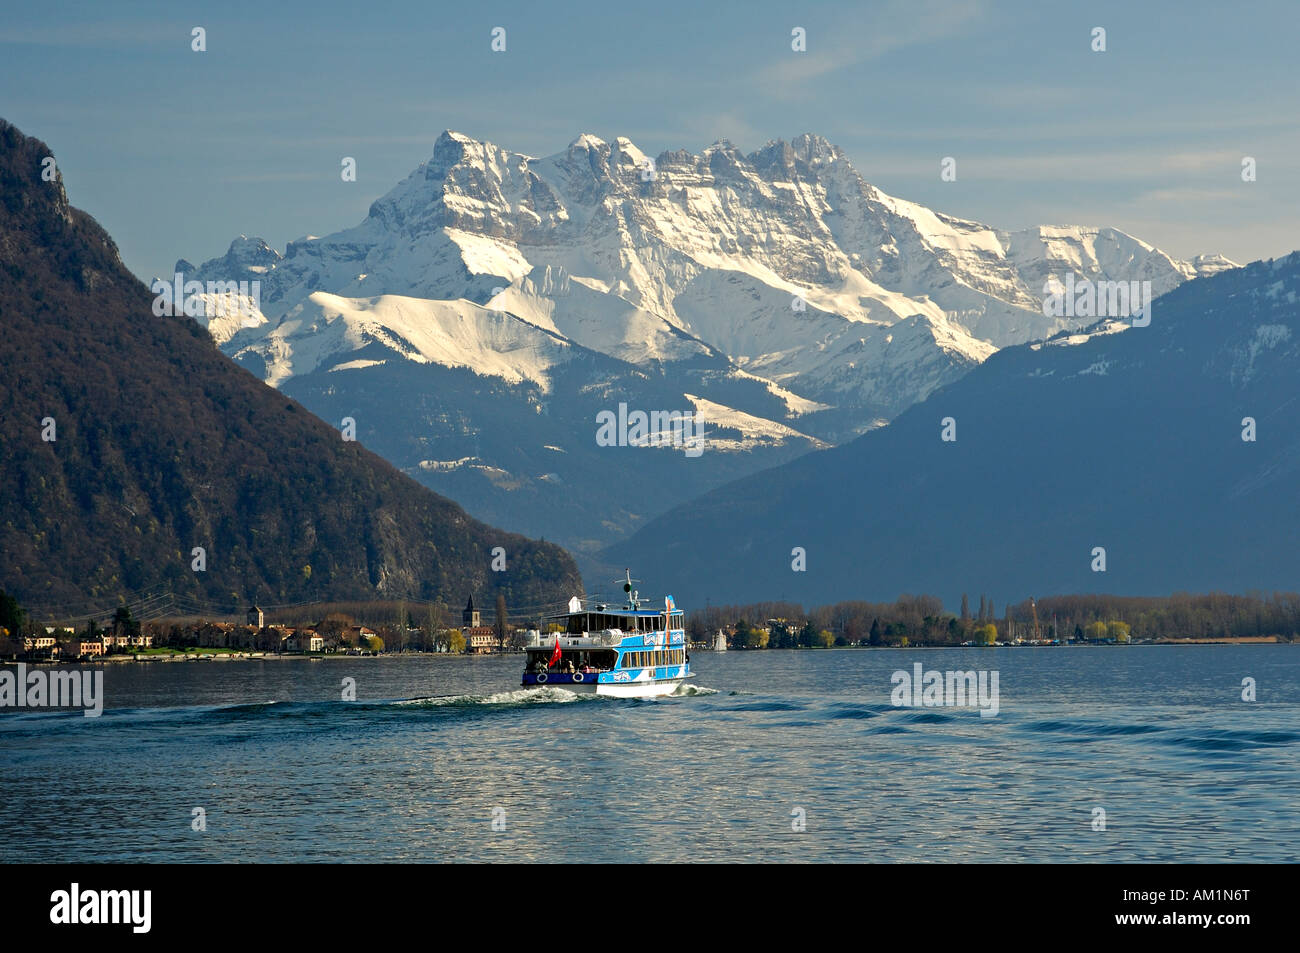 Ship excursion on Lake Geneva beneath the peaks of Dents du Midi, Montreux, Switzerland Stock Photo